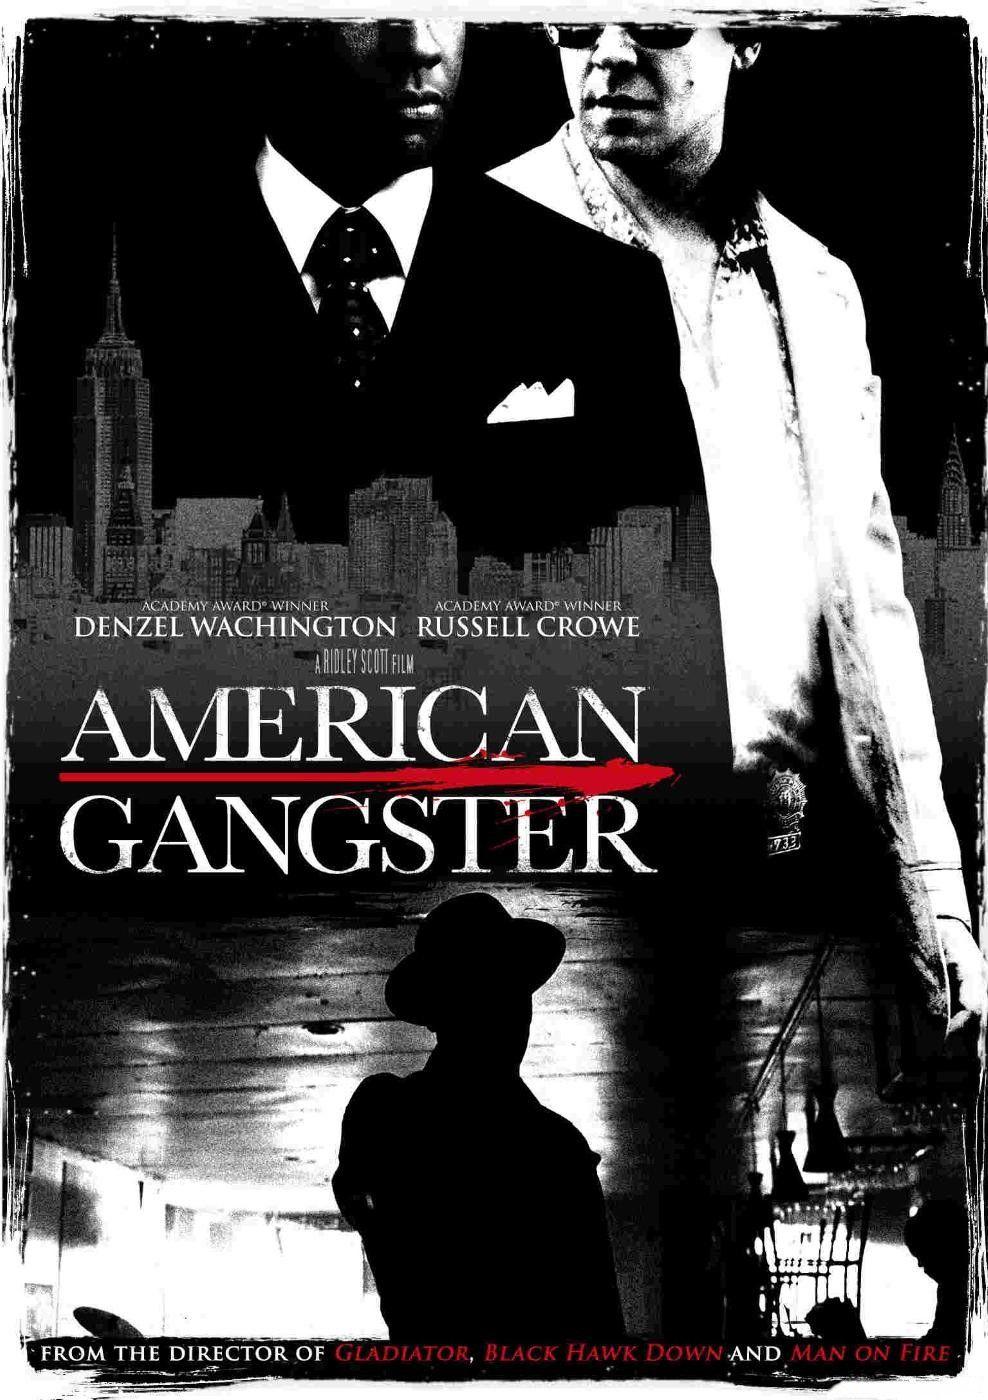 American Gangster Wallpapers